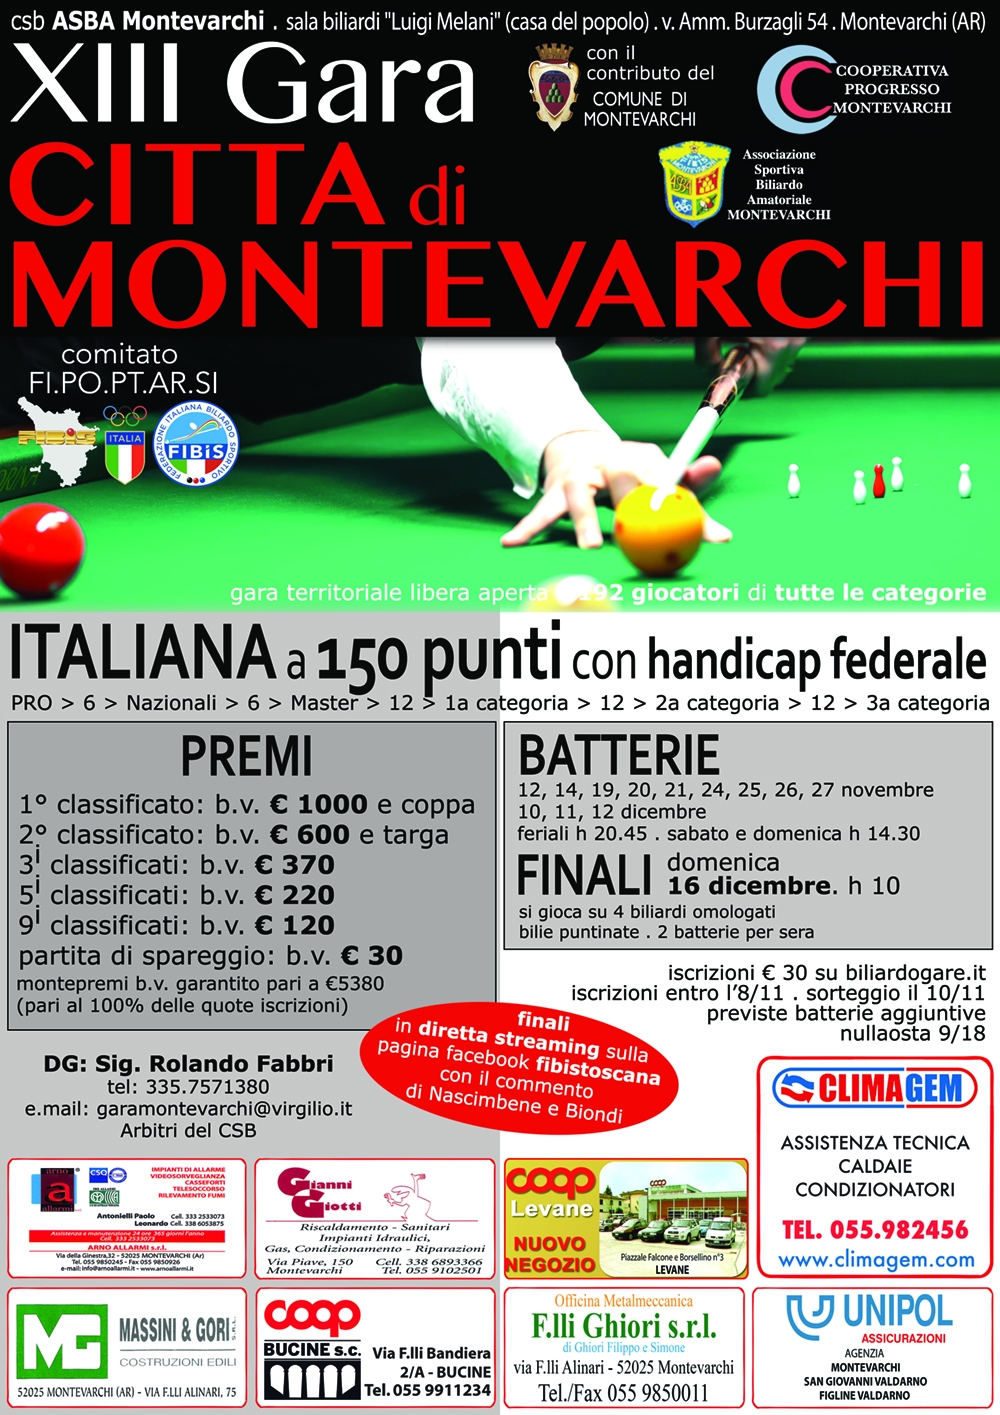 XIII Gara Citta' di Montevarchi